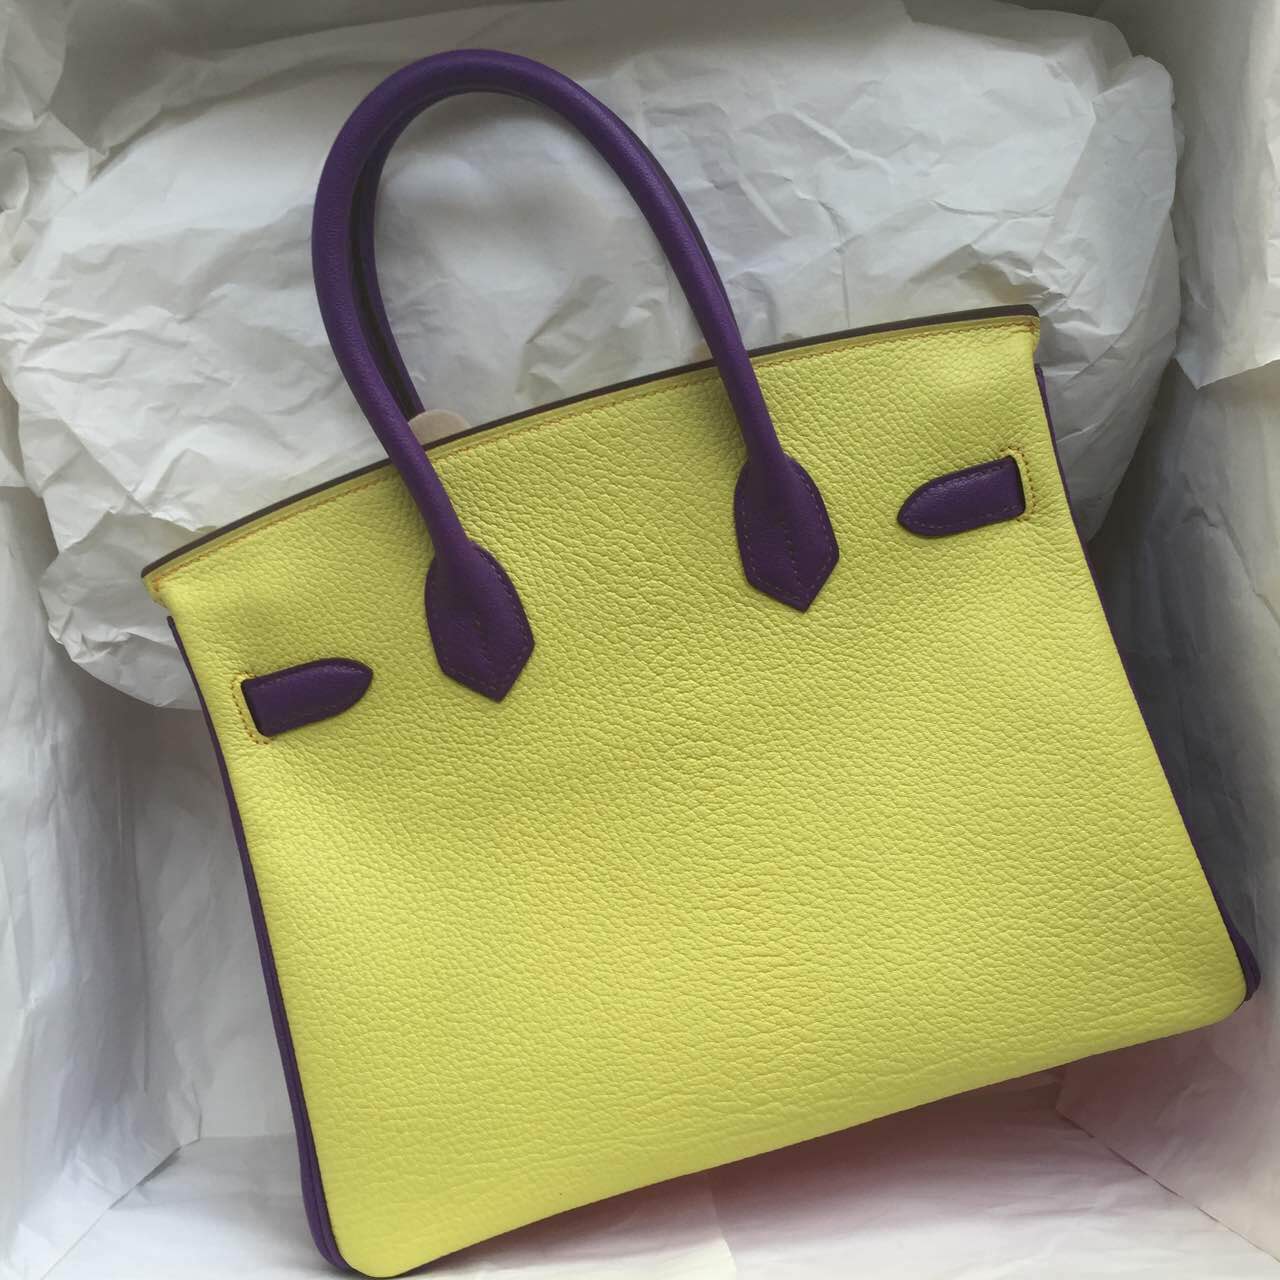 Cheap Hermes Birkin Bag 30cm Purple &#038; Yellow &#038; Pink Chevre Leather Handbag